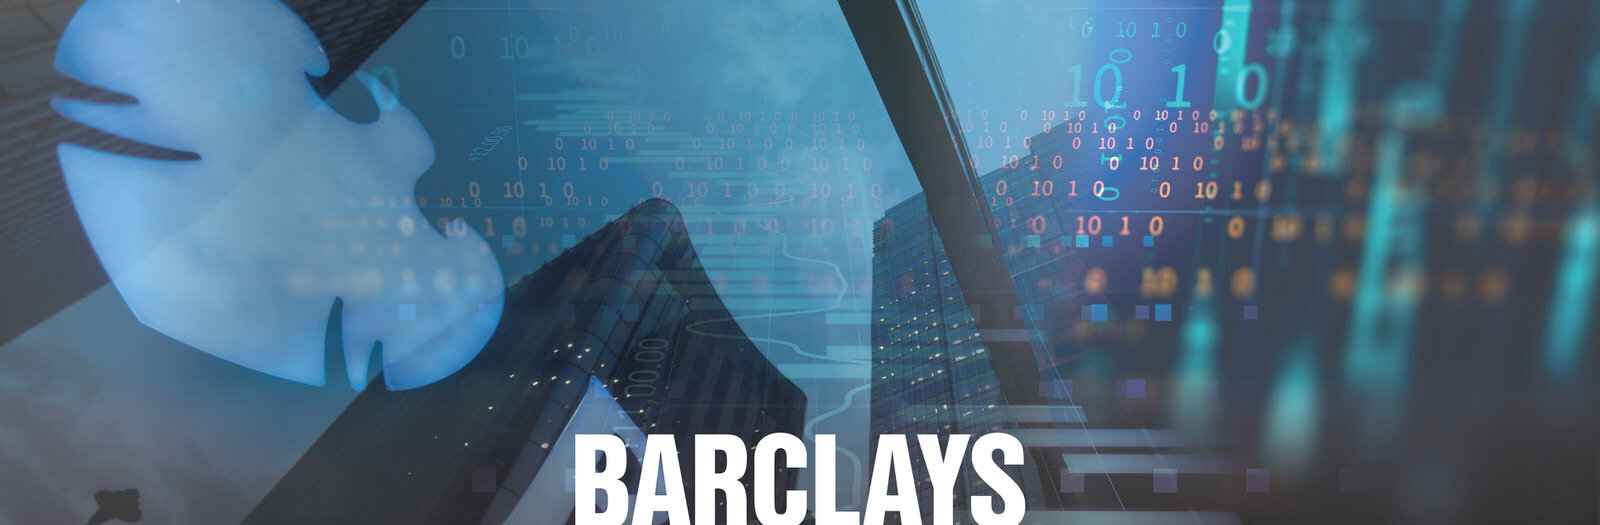 Barclays - Notable Case